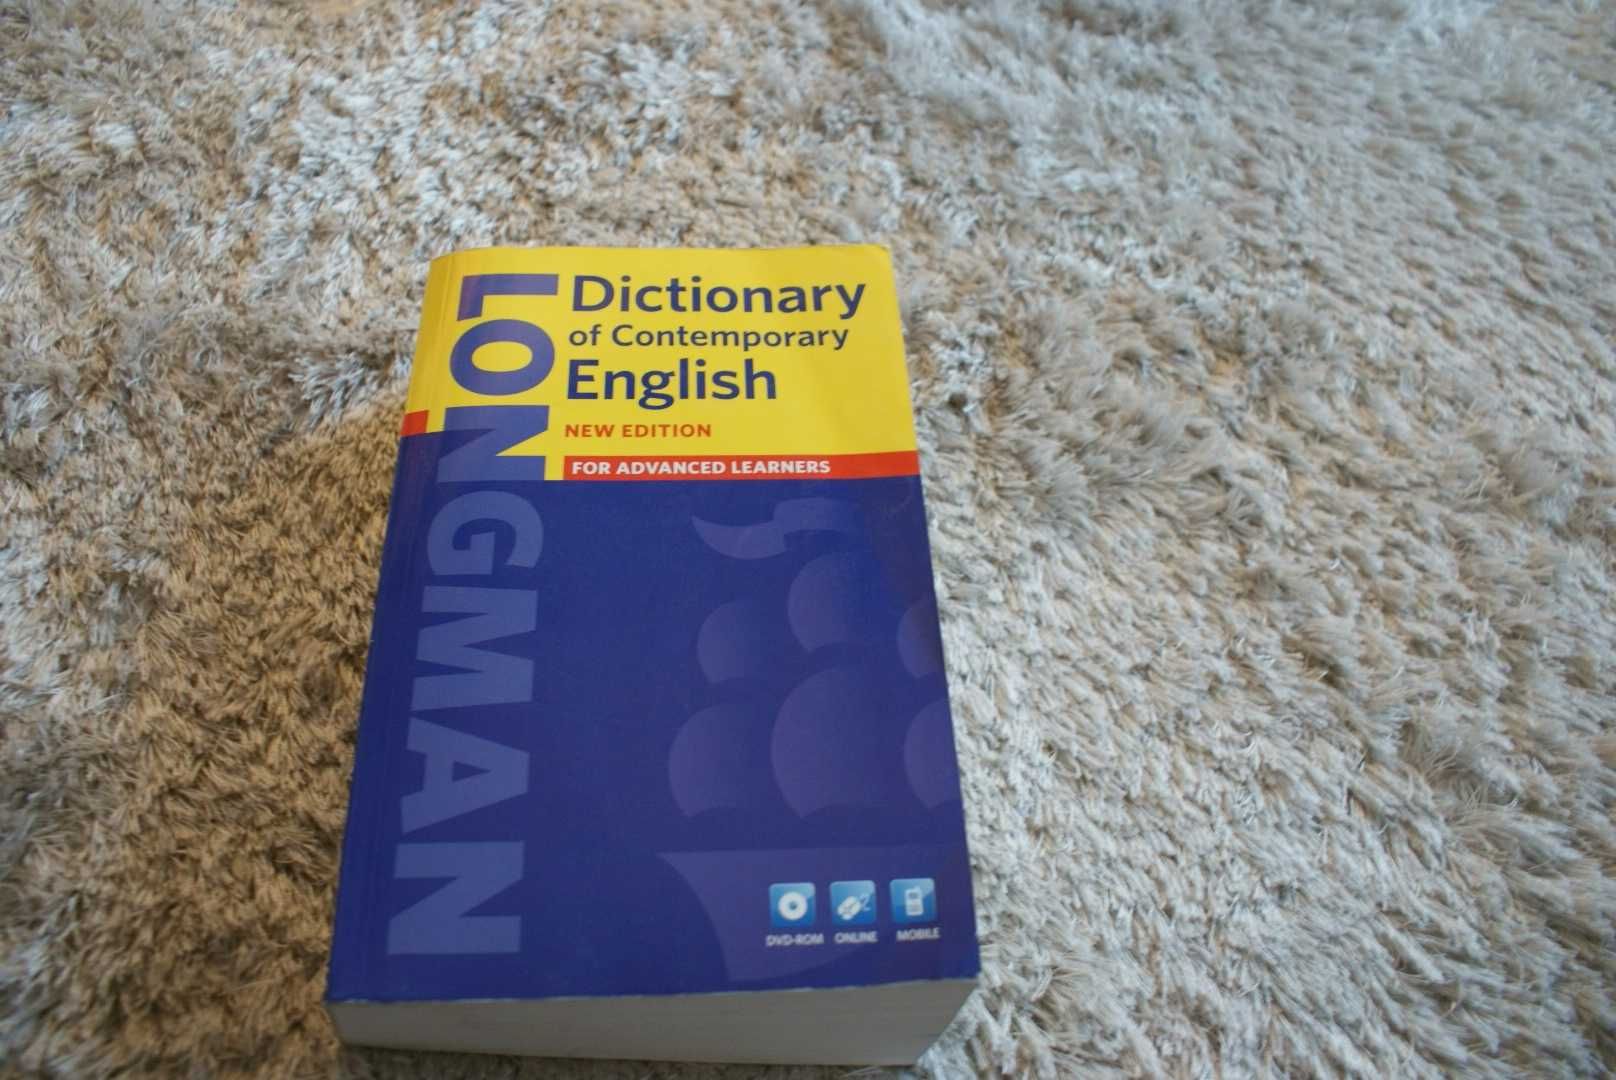 Słownik Longman Dictionary of Contemporary English